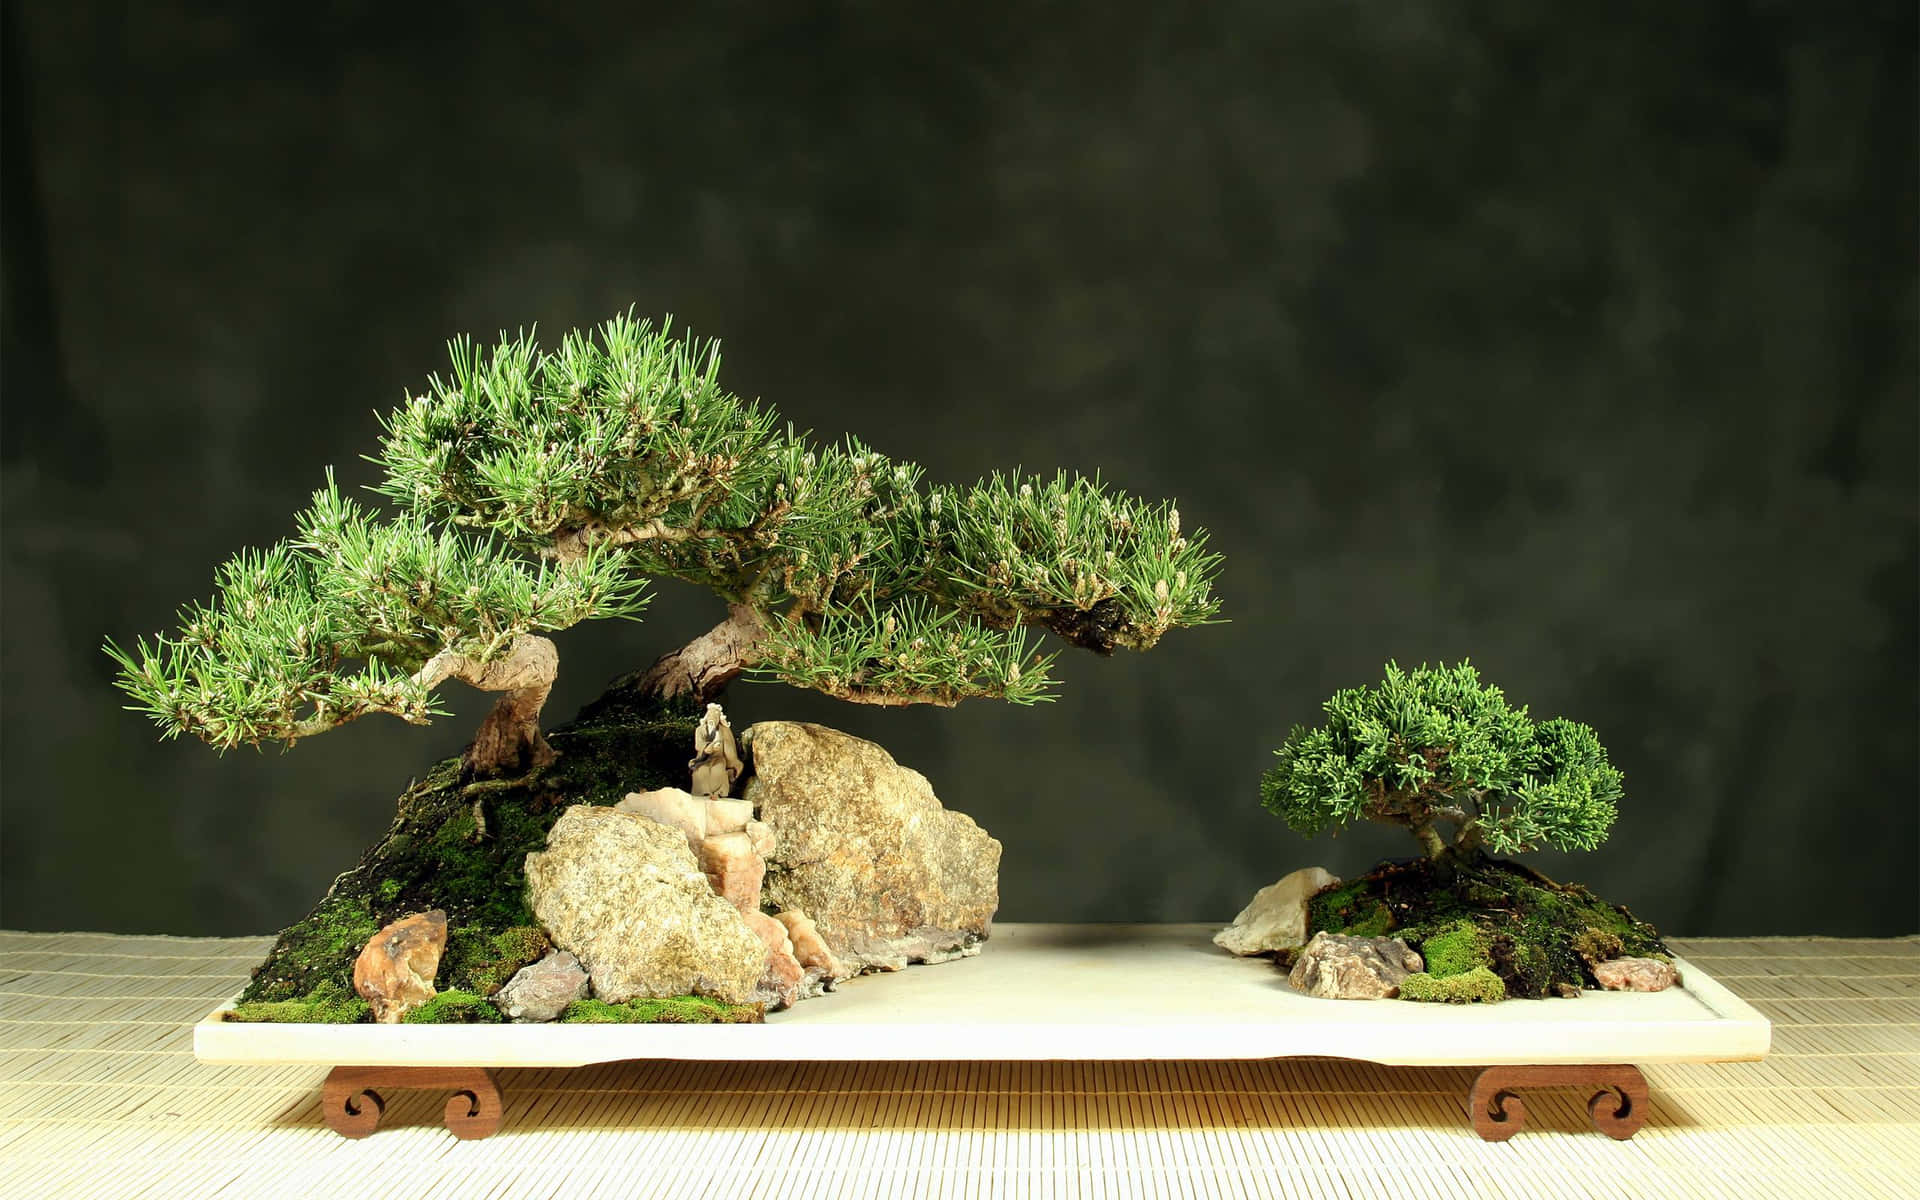 A majestic bonsai tree on display